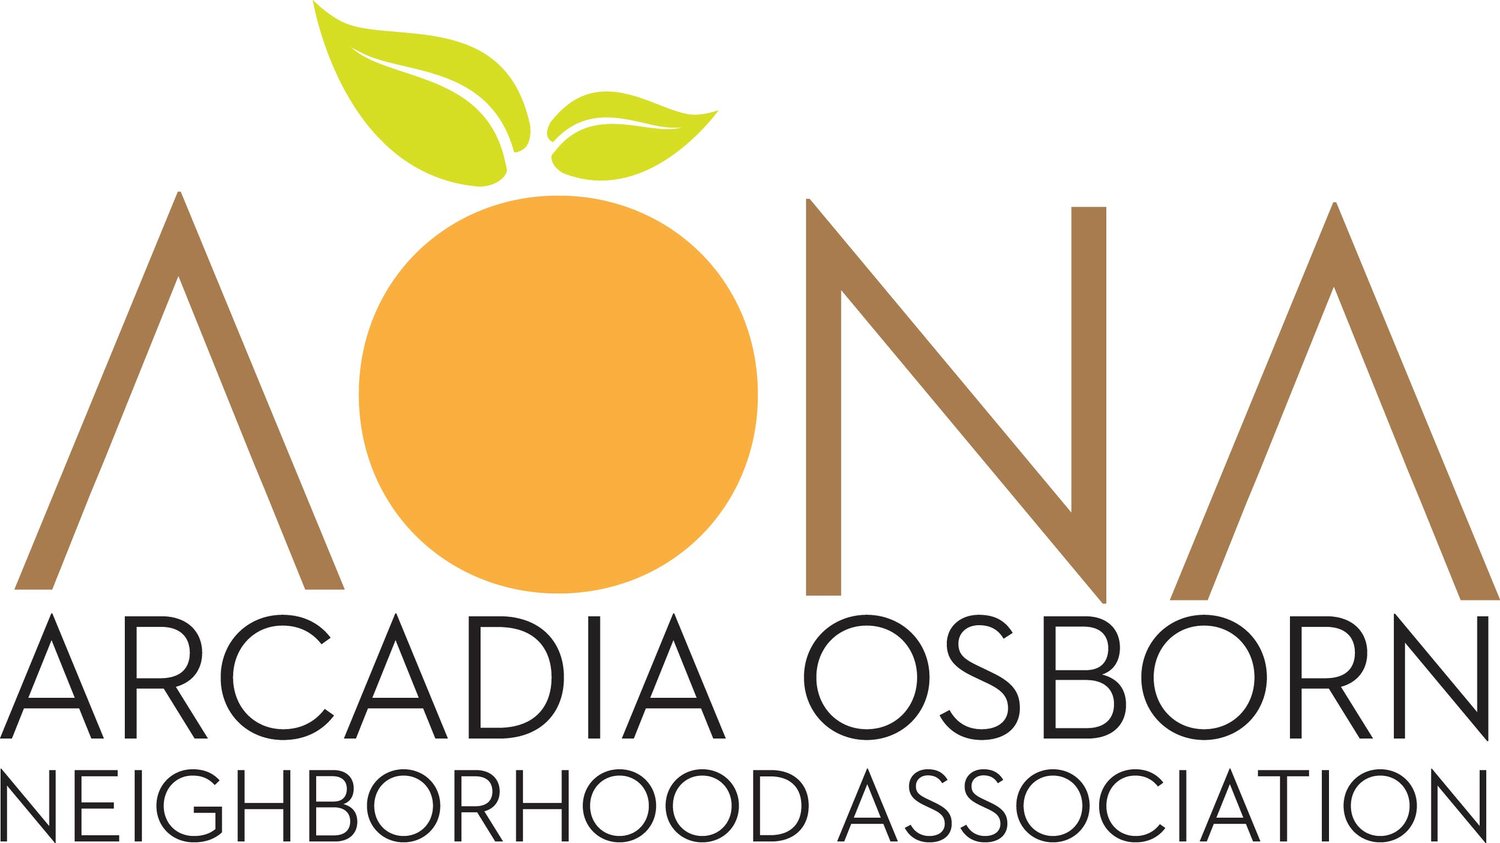 Arcadia Osborn Neighborhood Association